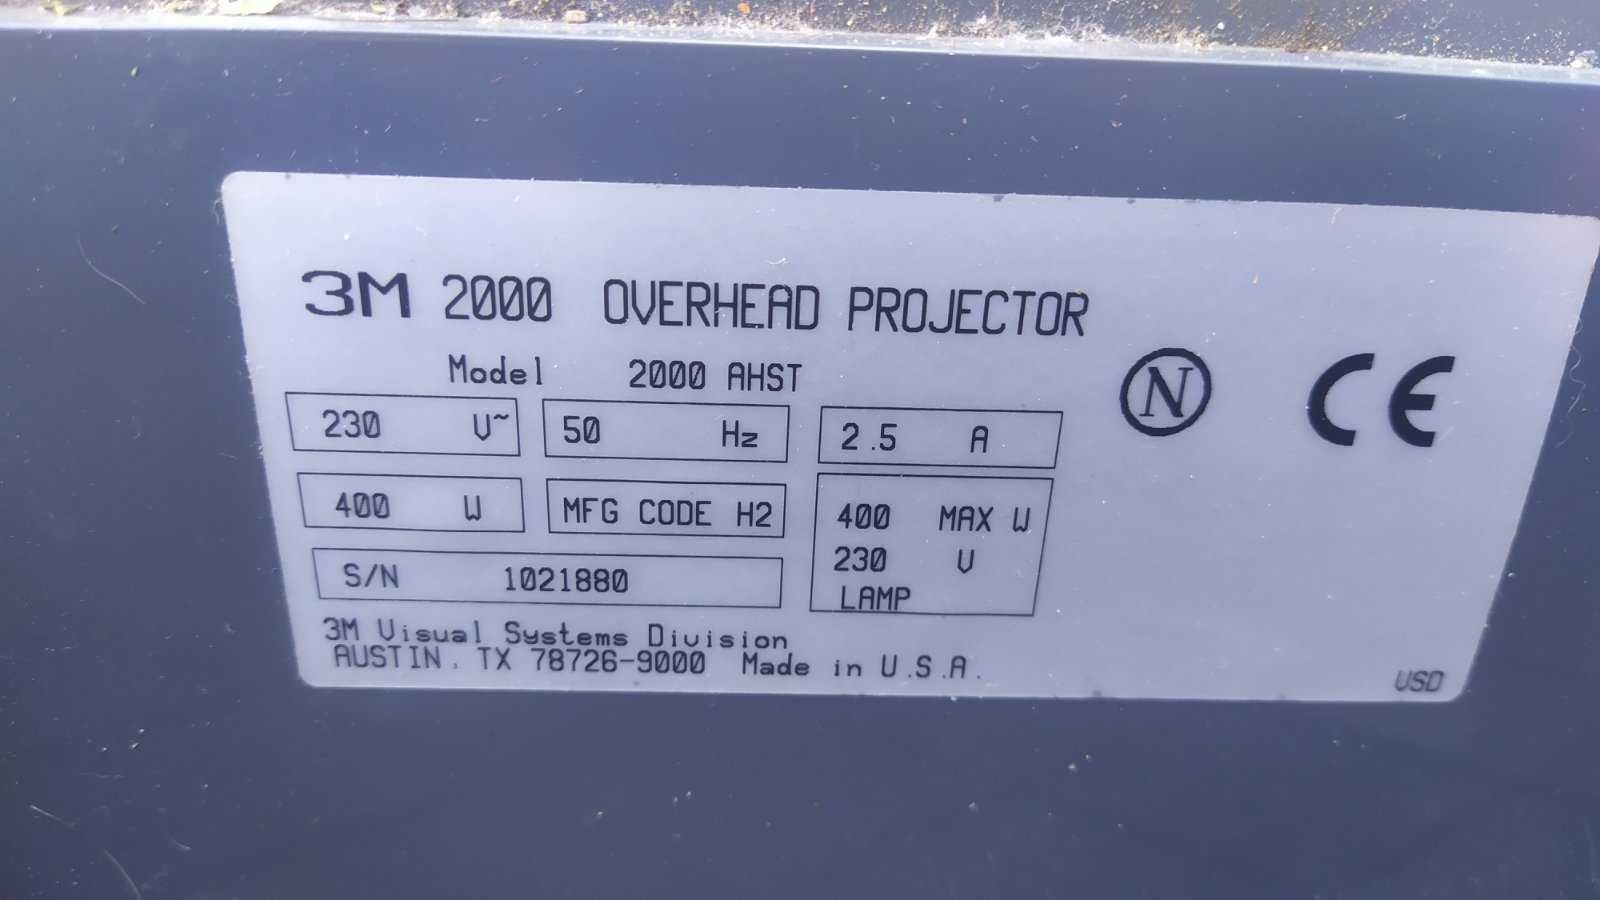 3M Overhead Projector 2000 раритетный проектор